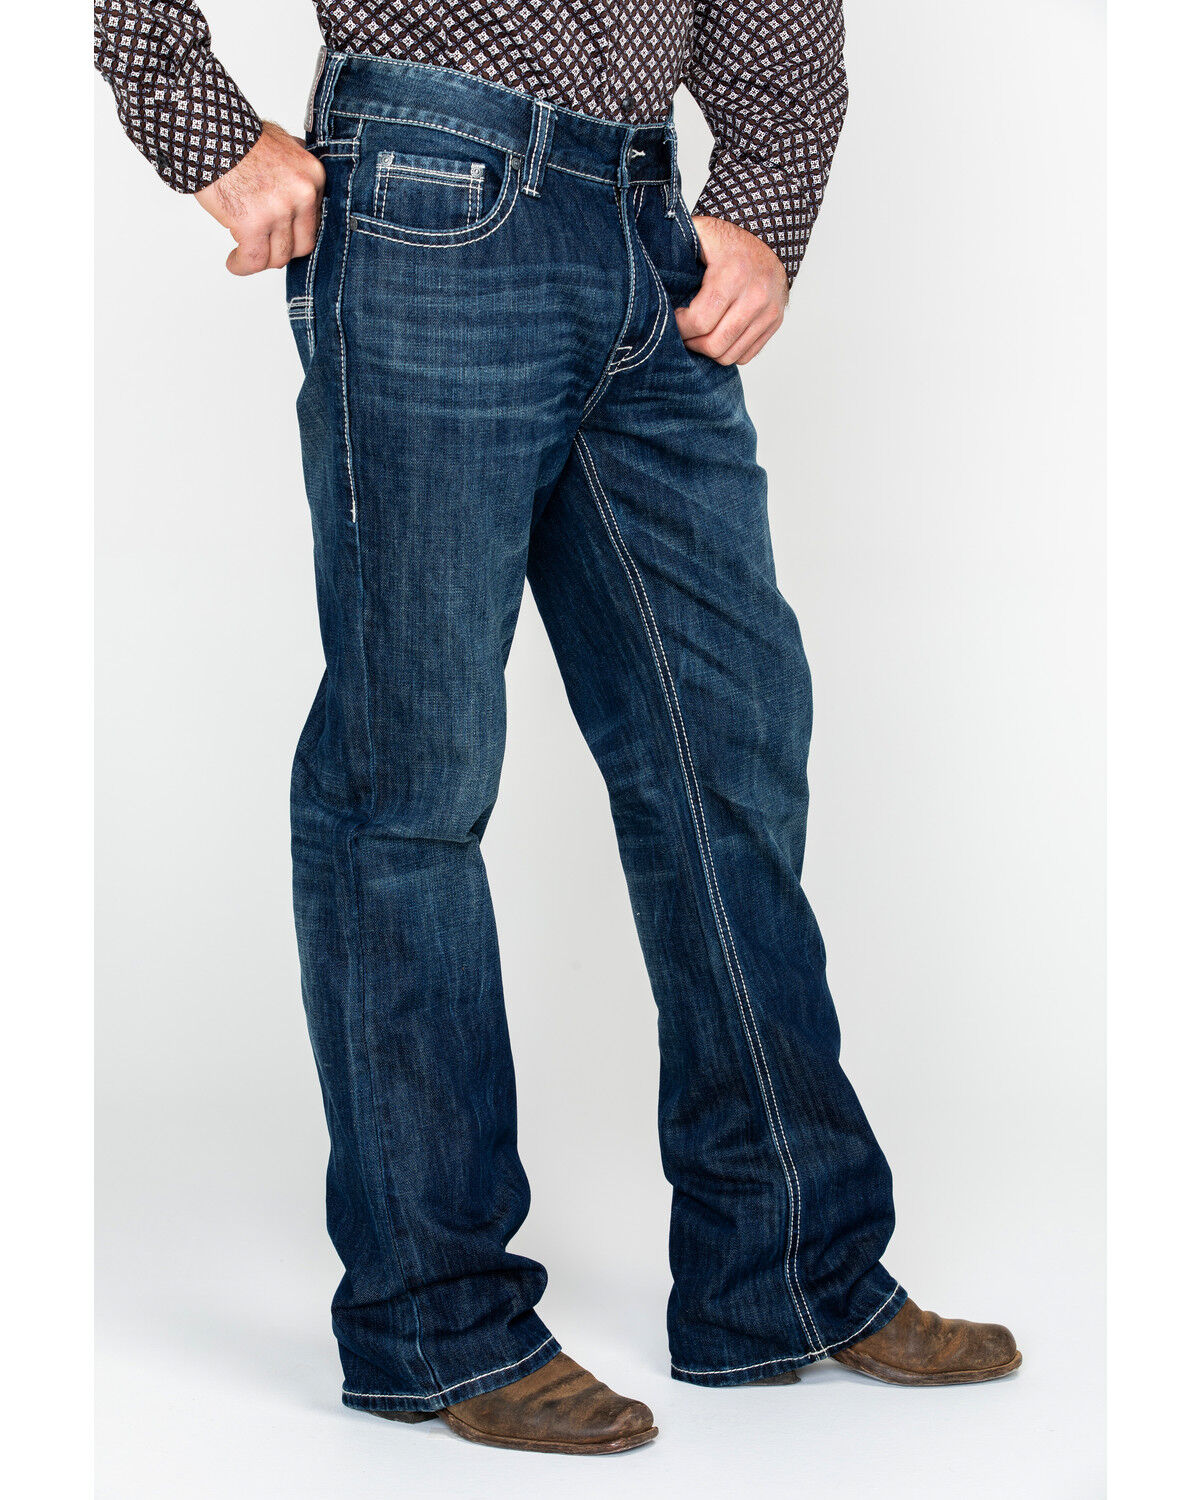 mens dark blue jeans with white stitching